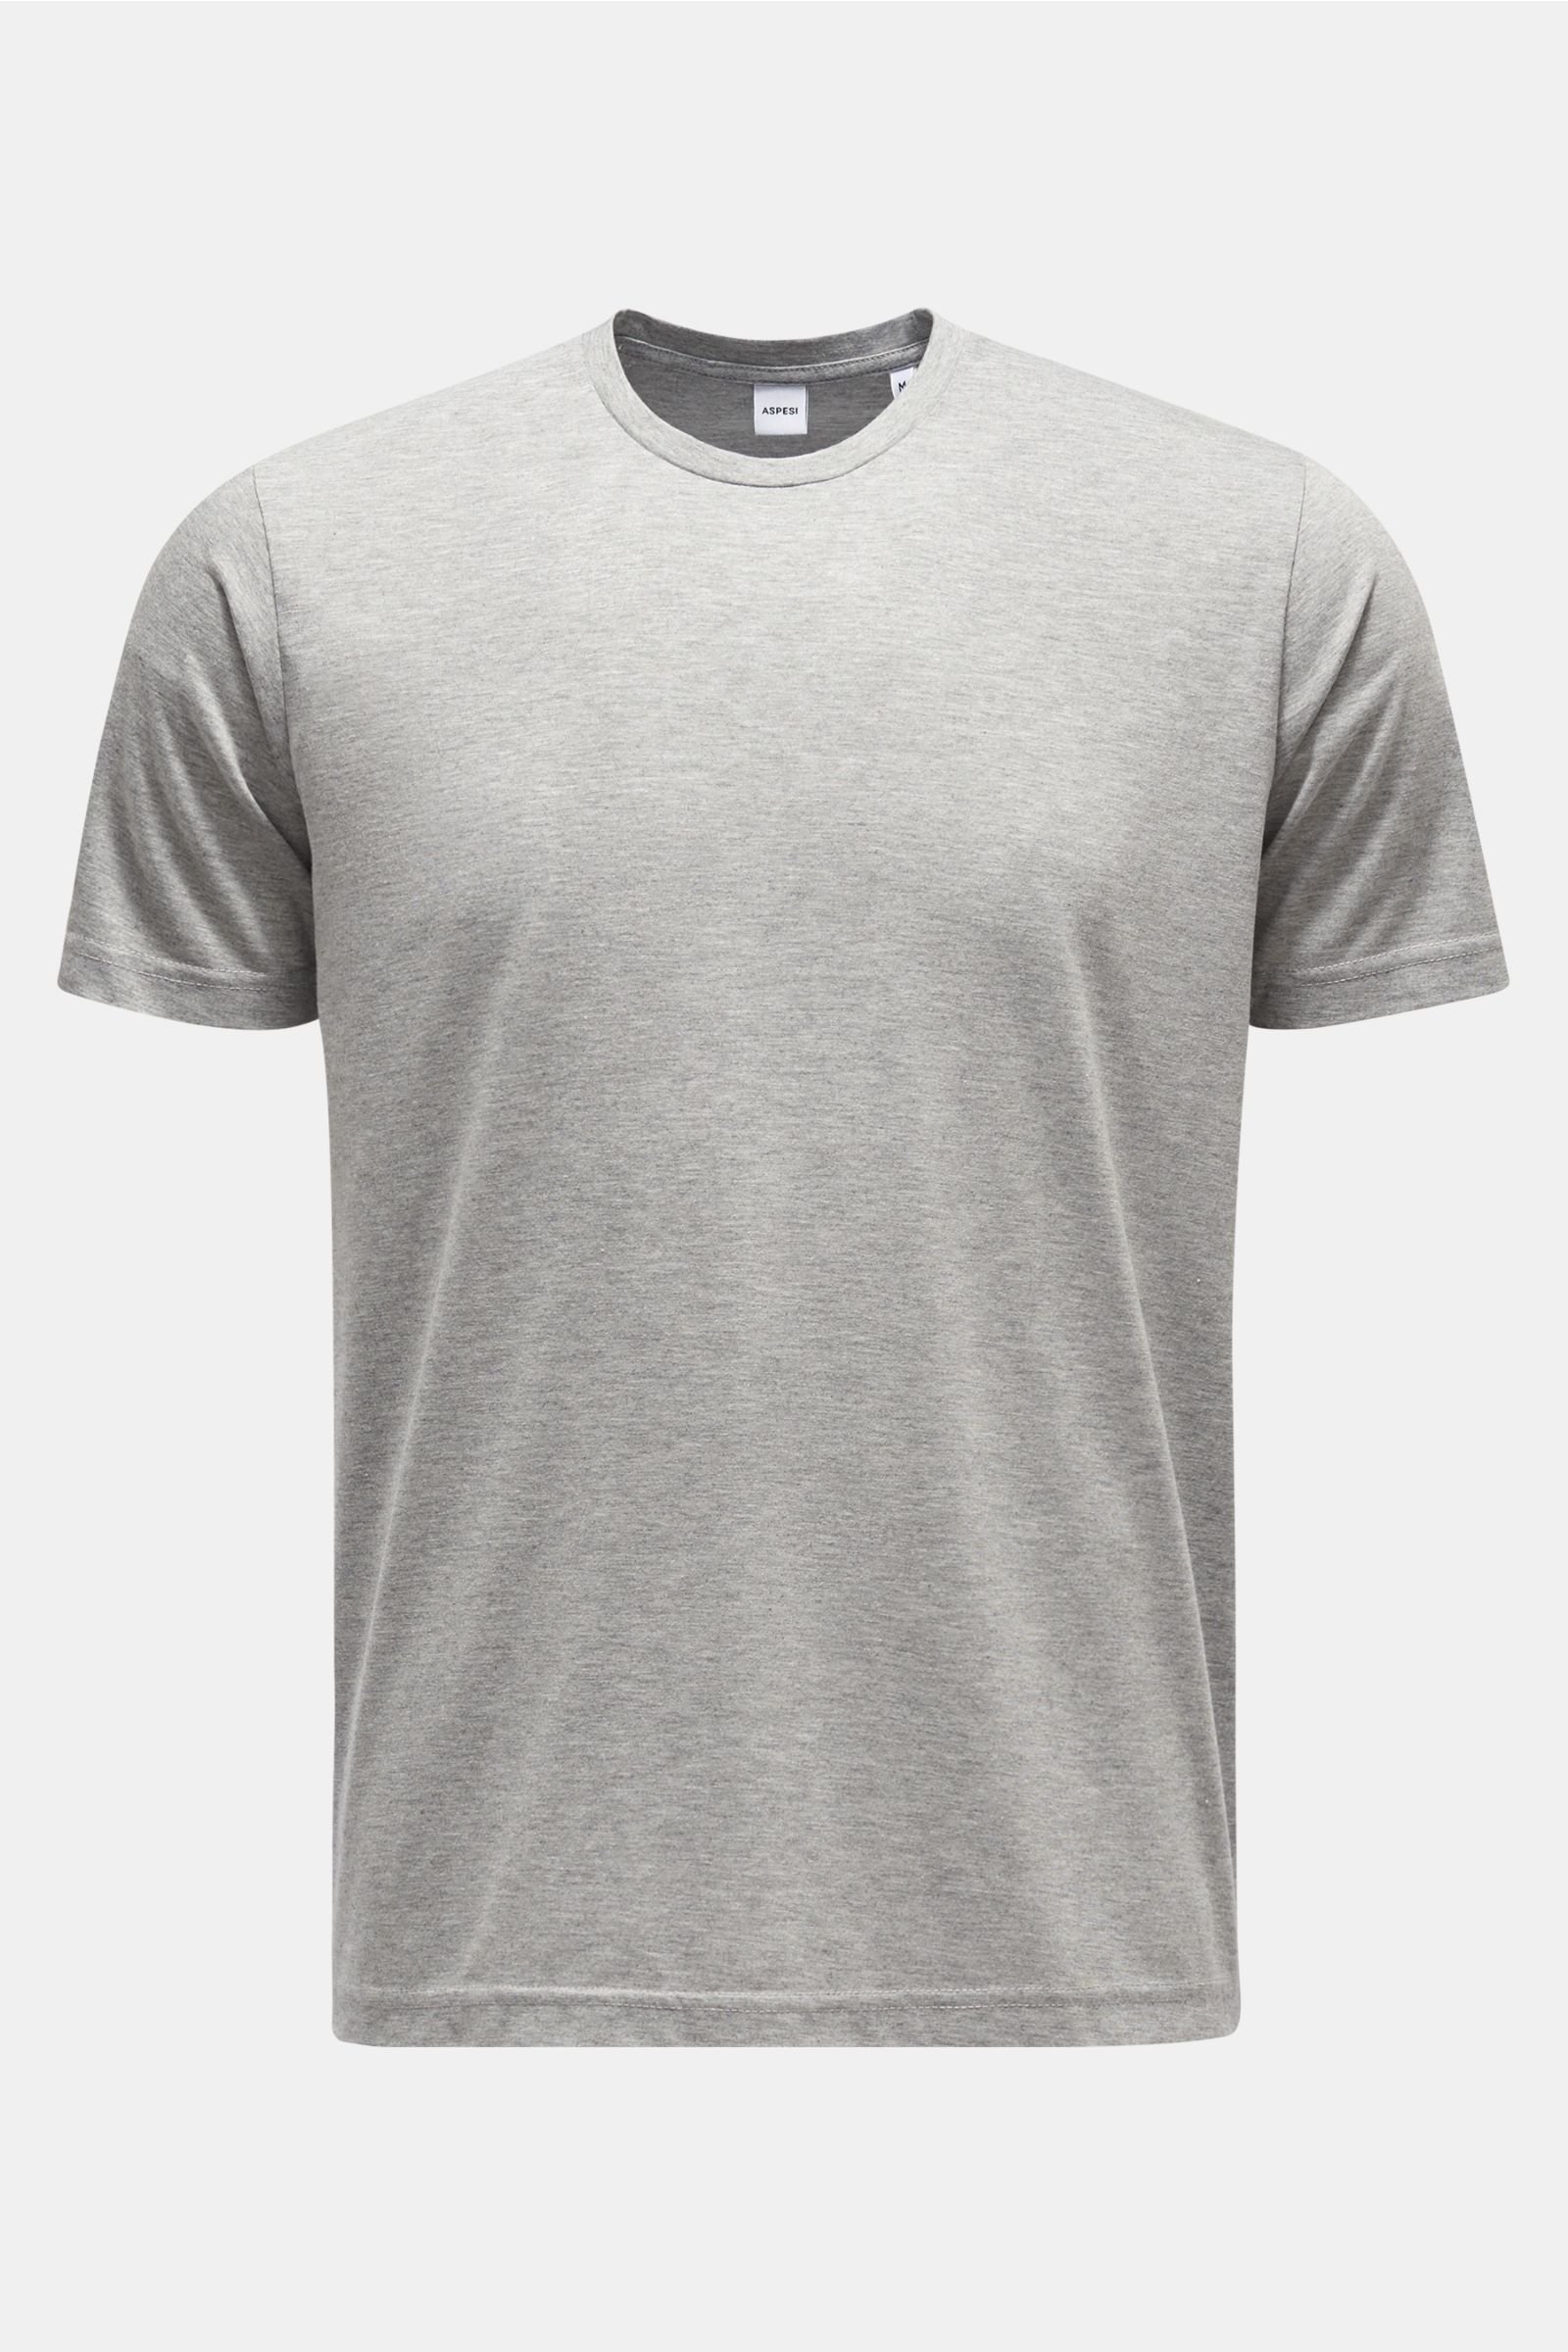 Crew neck T-shirt grey